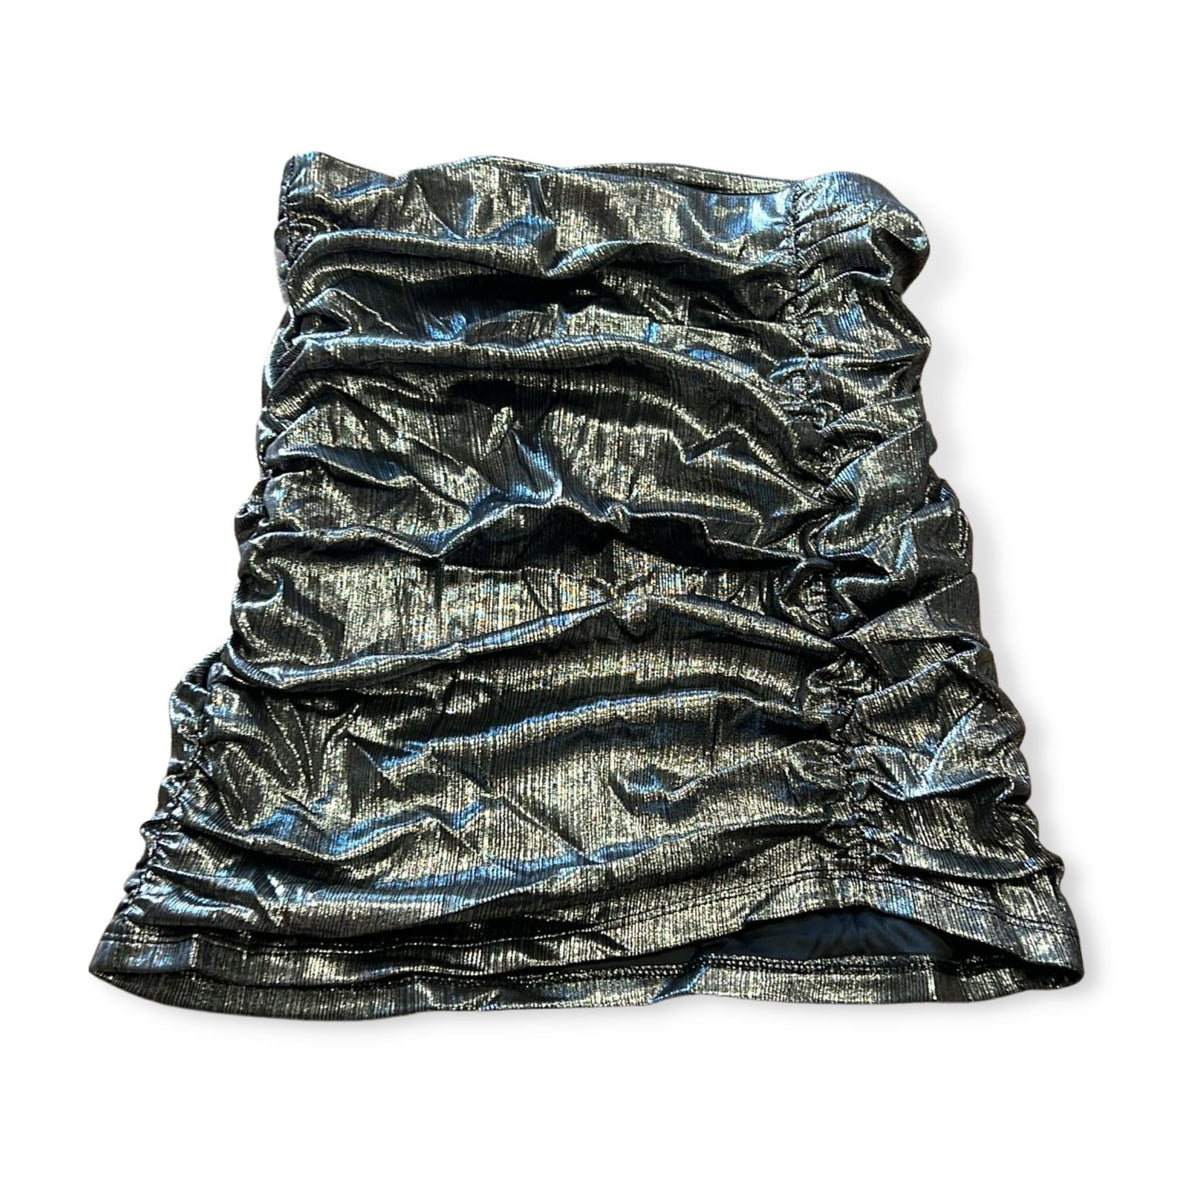 KatieJNYC Metallic Silver Alison Skirt Jr - a Spirit Animal - Skirt $60-$90 active Aug 2022 Jr Large